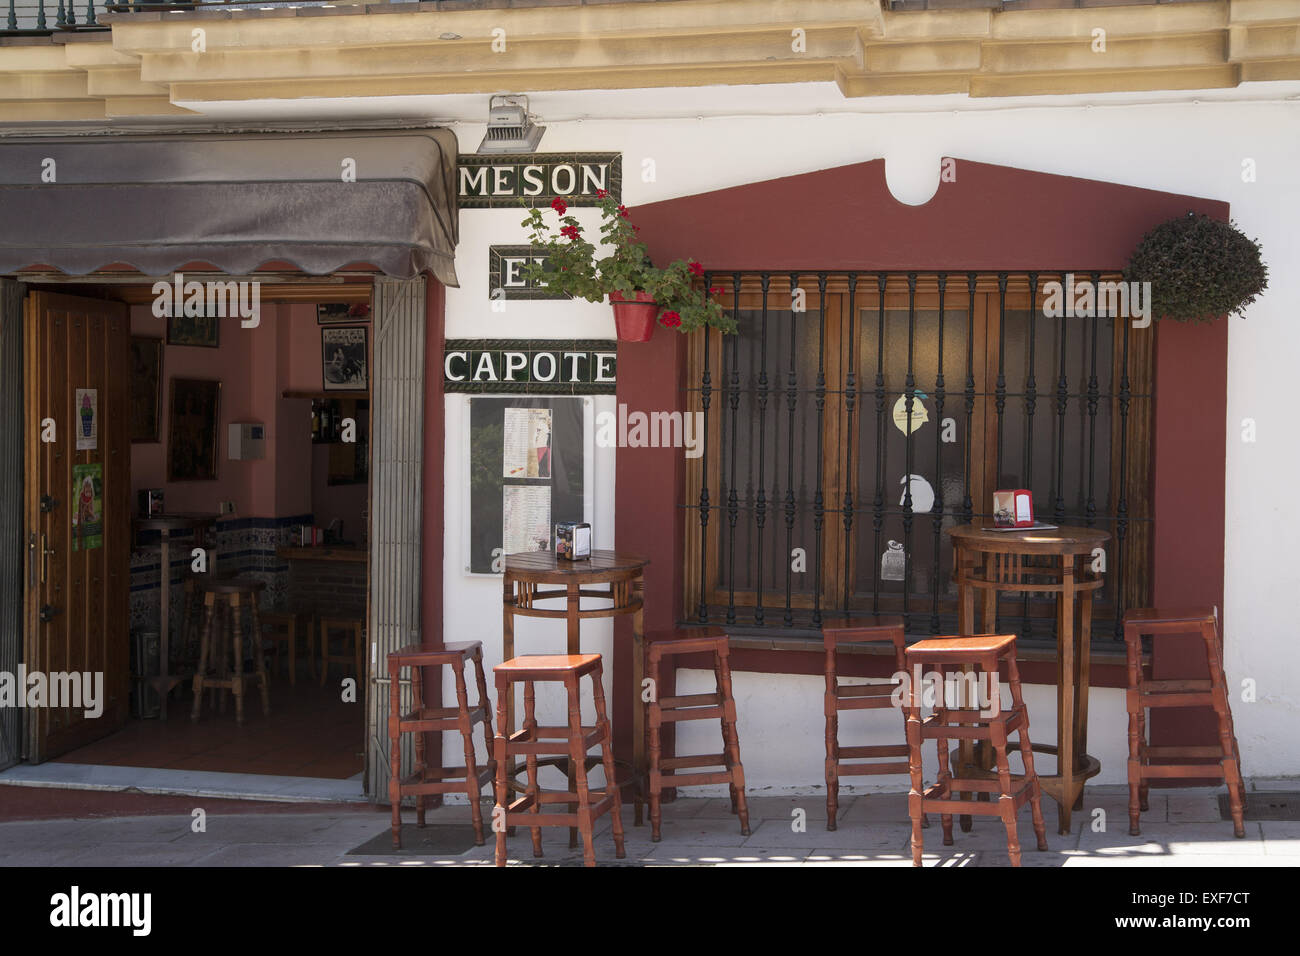 Spanish street café Stock Photo